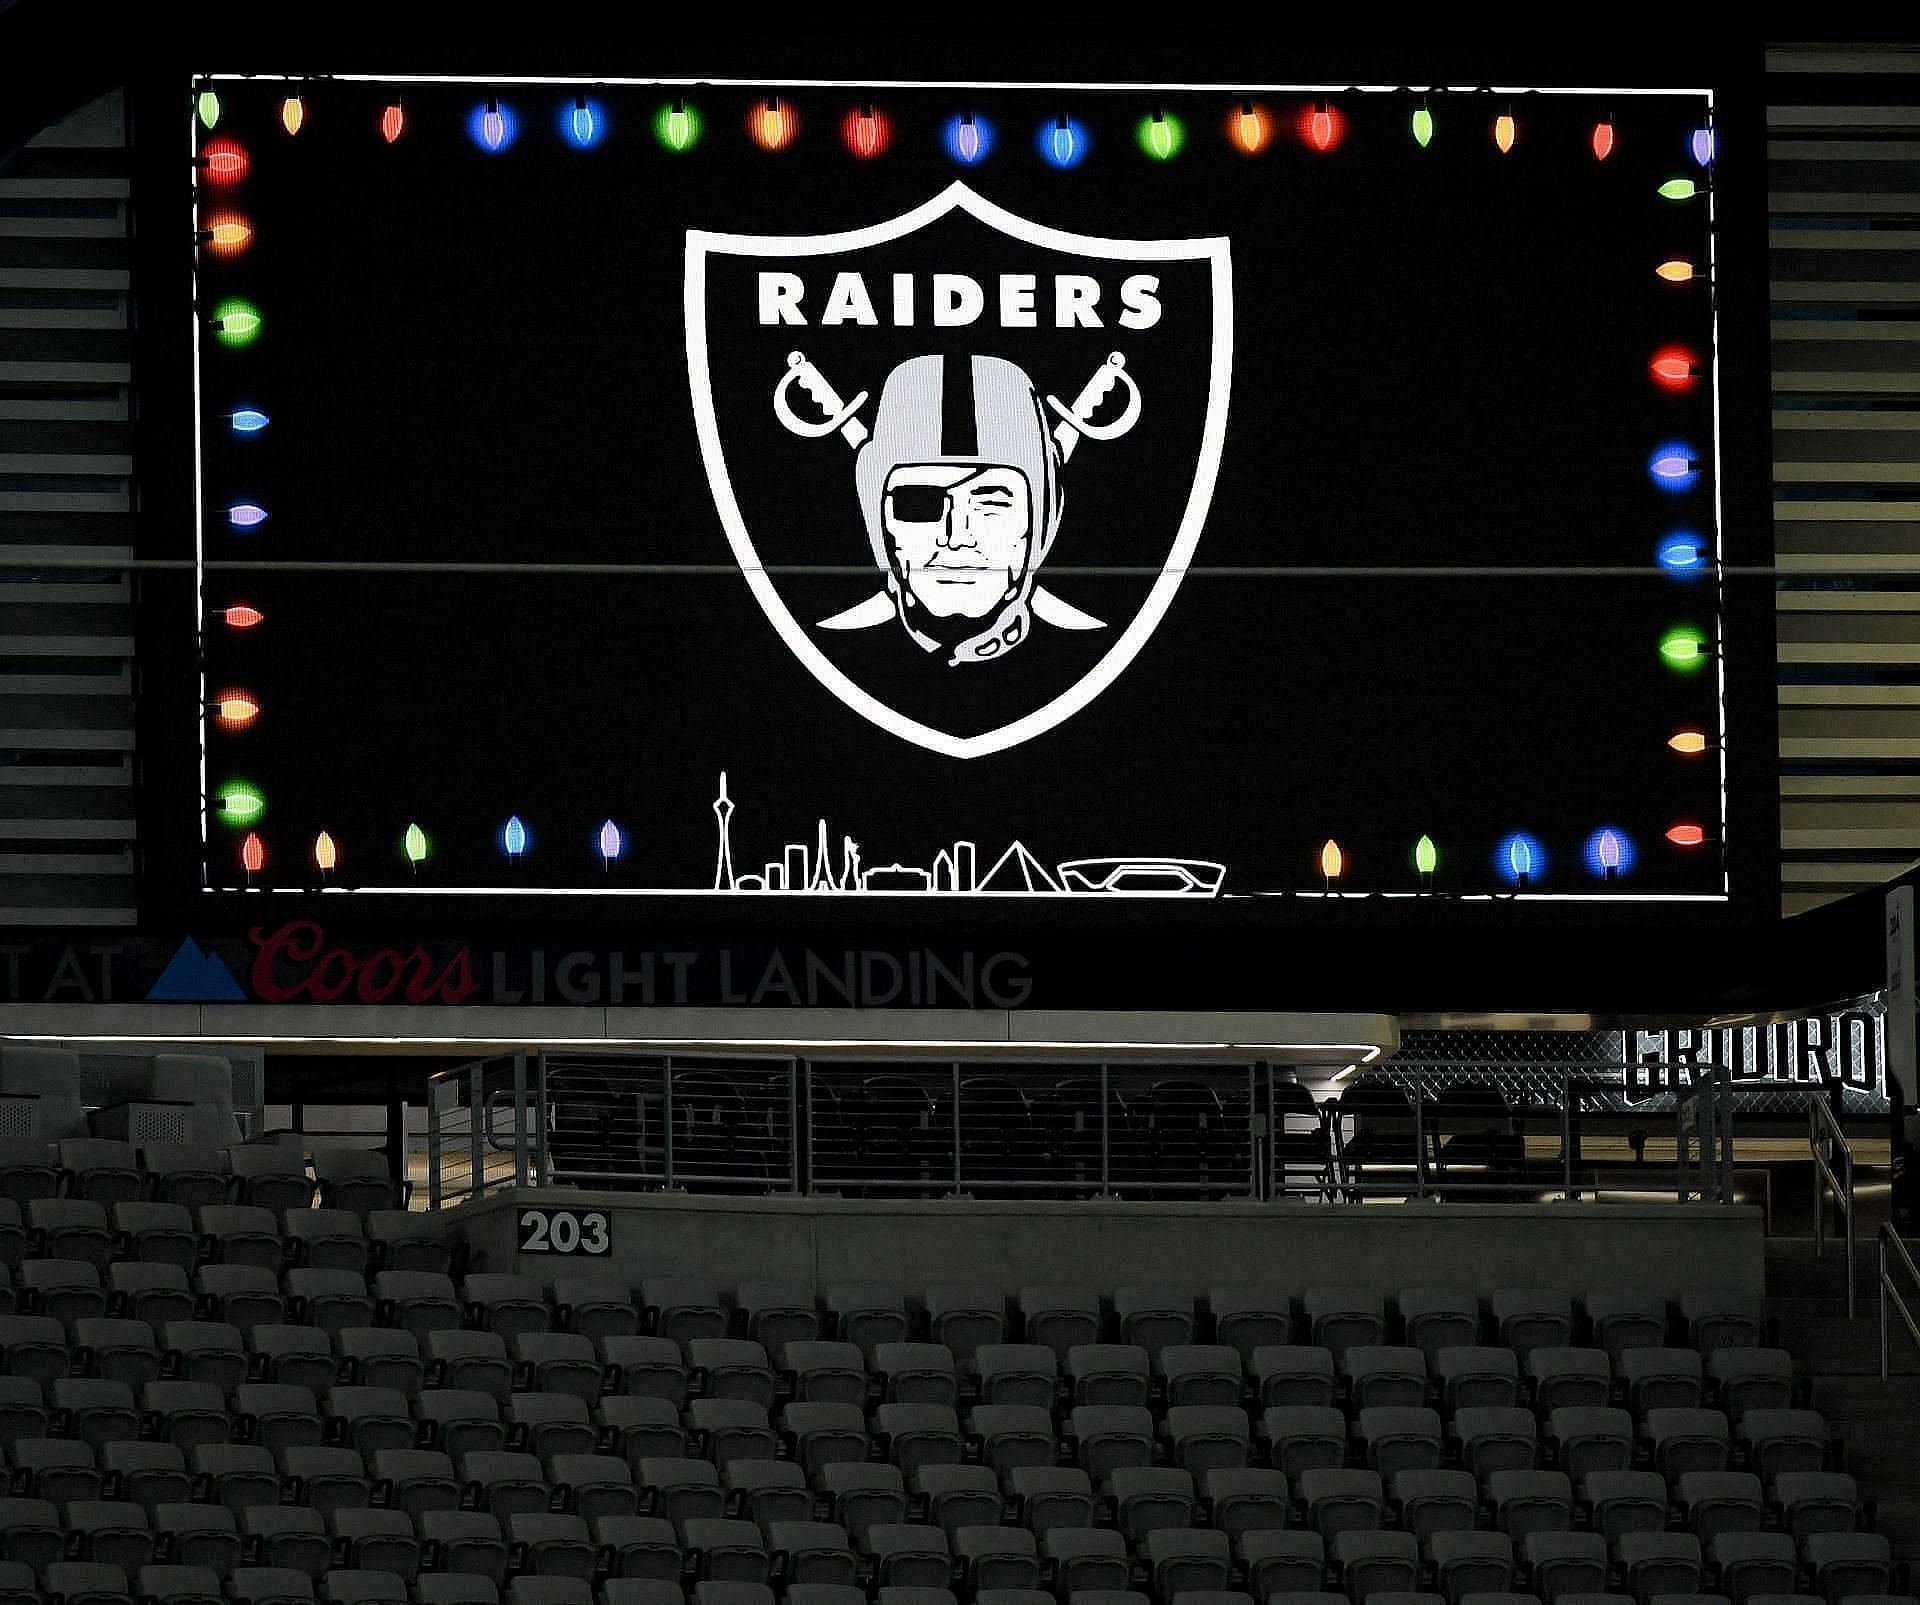 Las Vegas Raiders Latest News, Rumors, Schedule, Scores, Roster & More